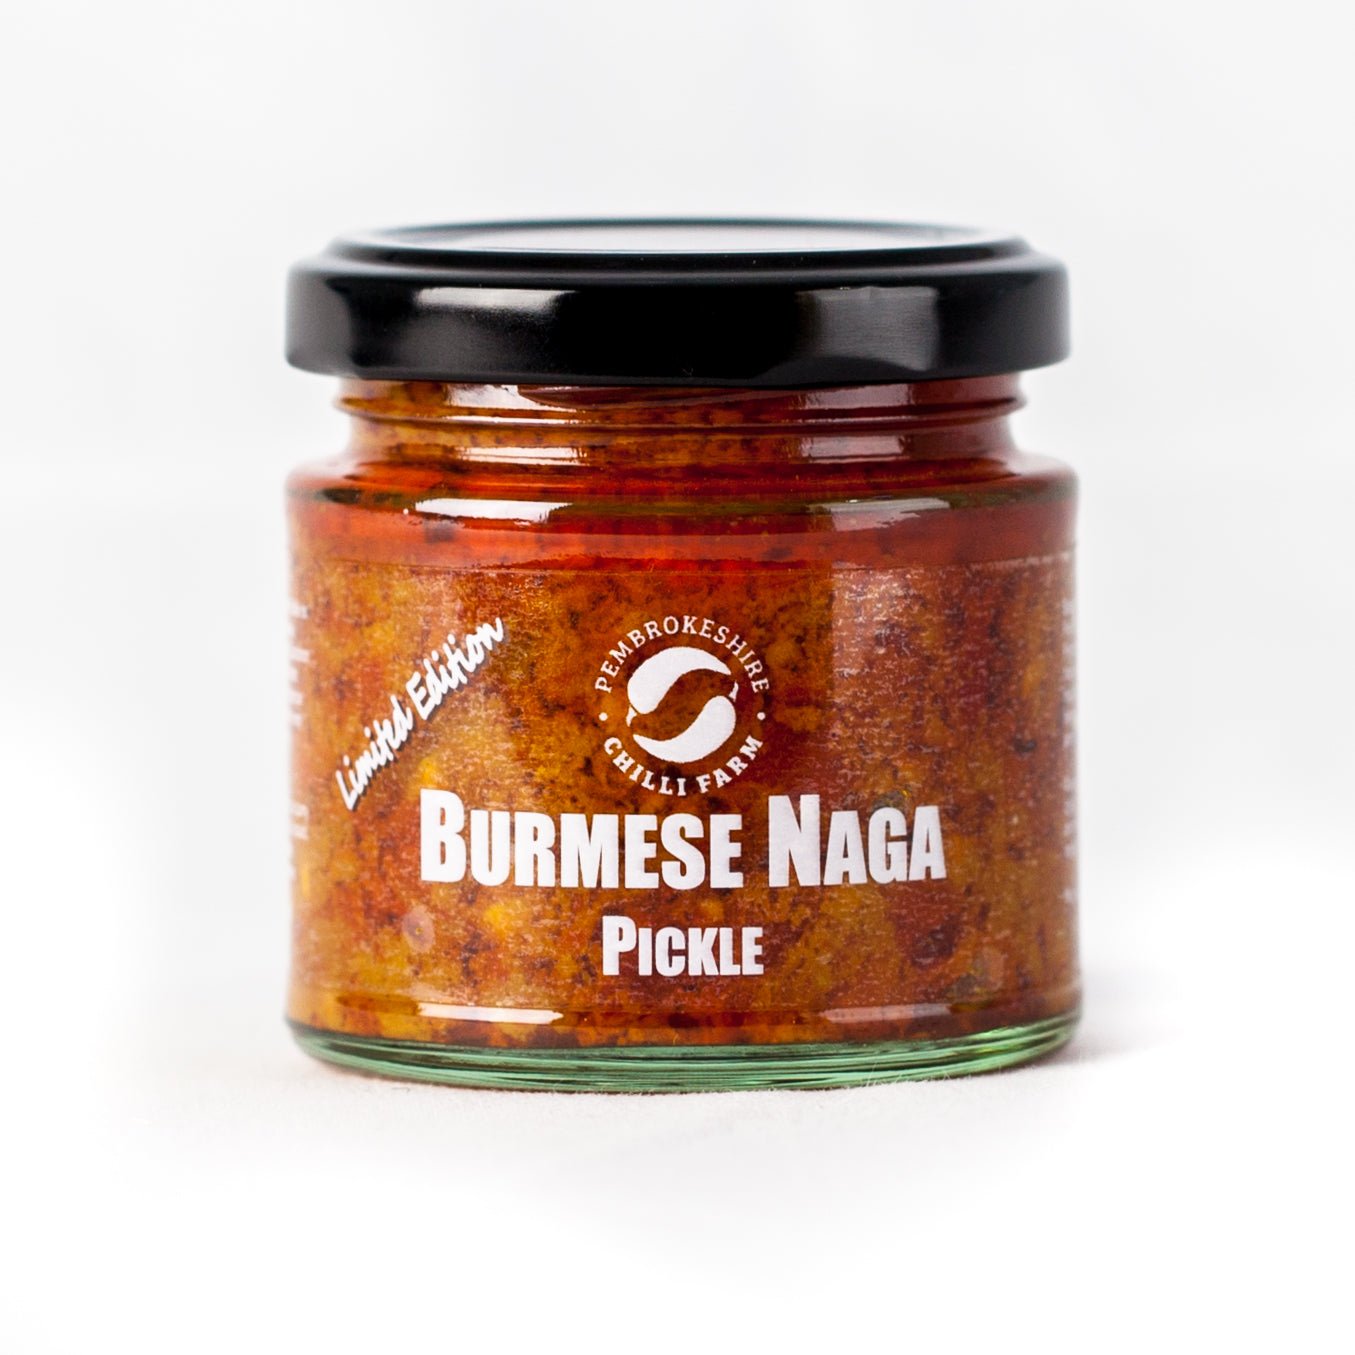 Burmese Naga Pickle - Pembrokeshire Chilli FarmPickle